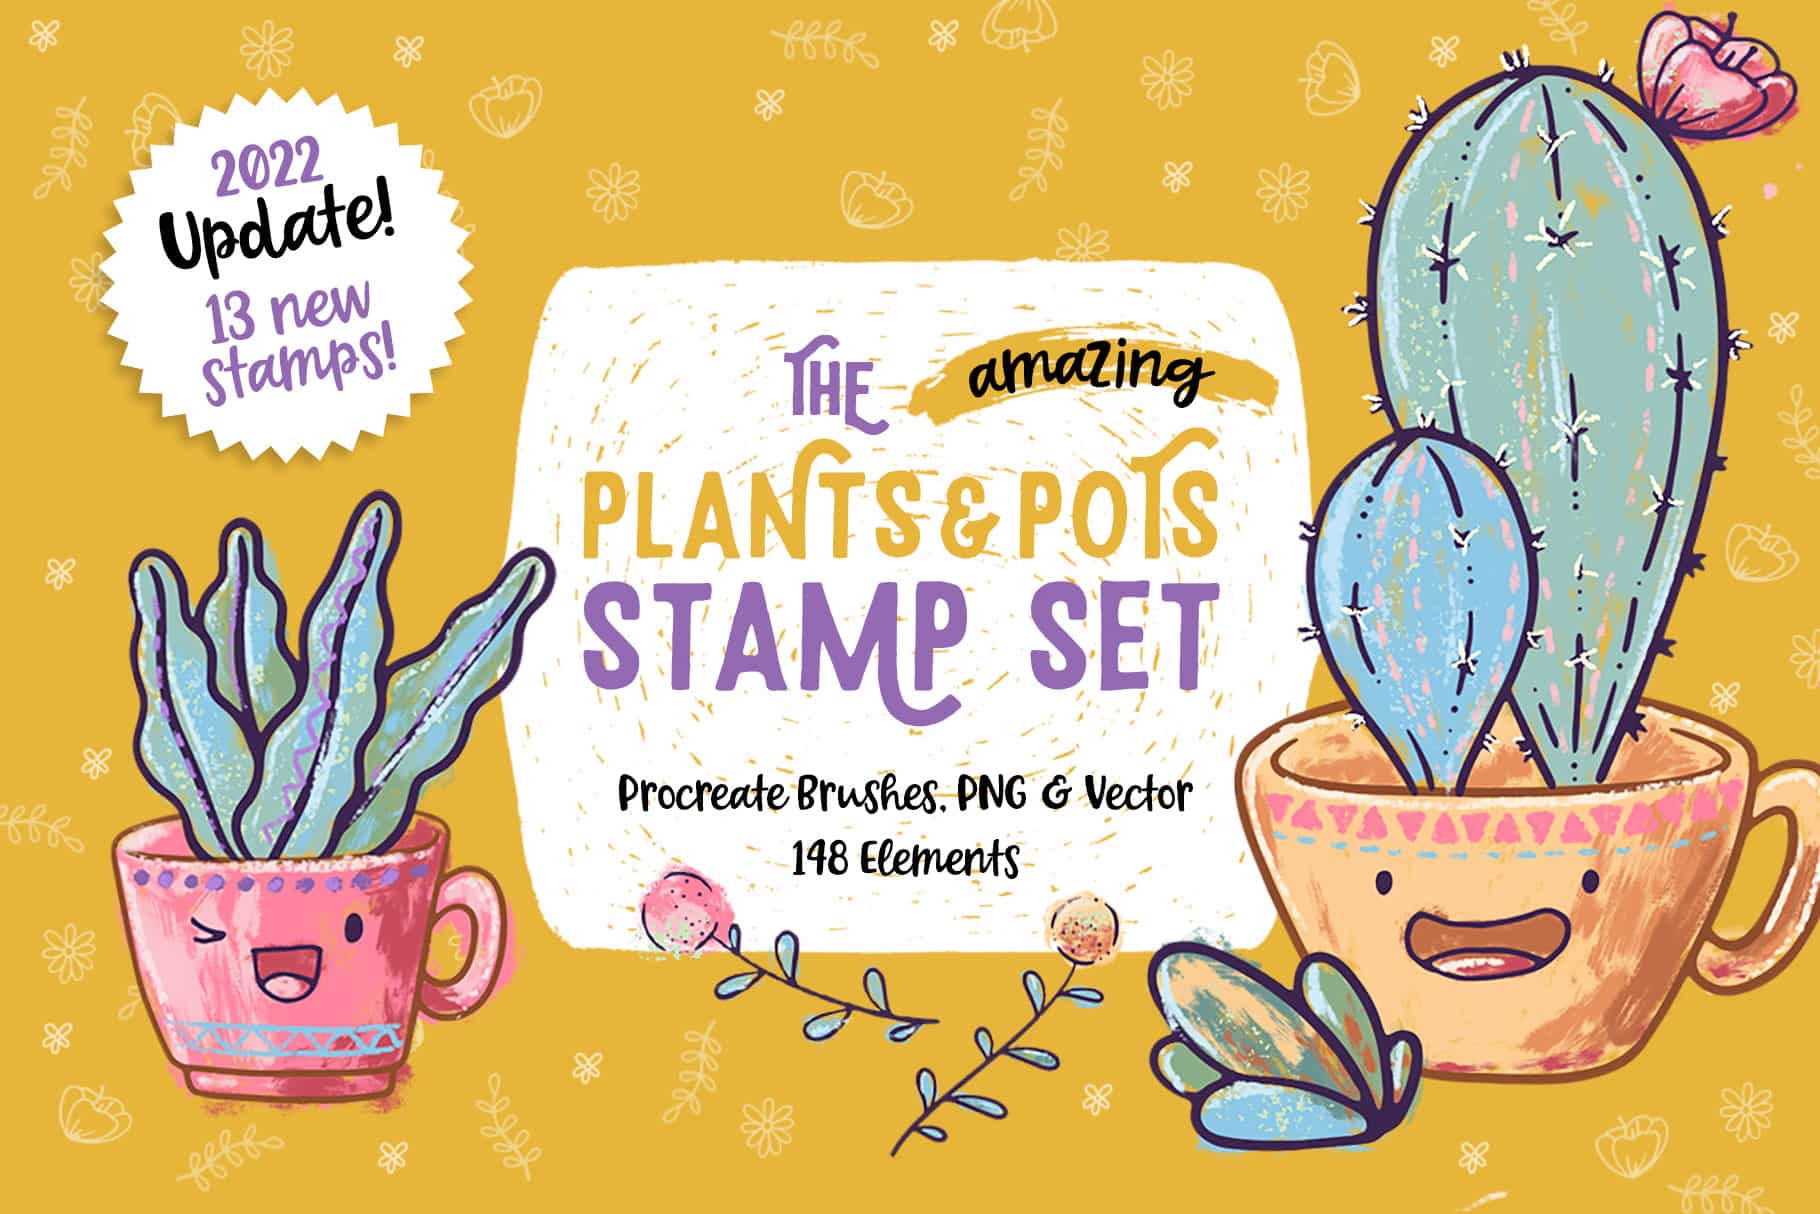 Procreate Plants & Pots Stamp Set